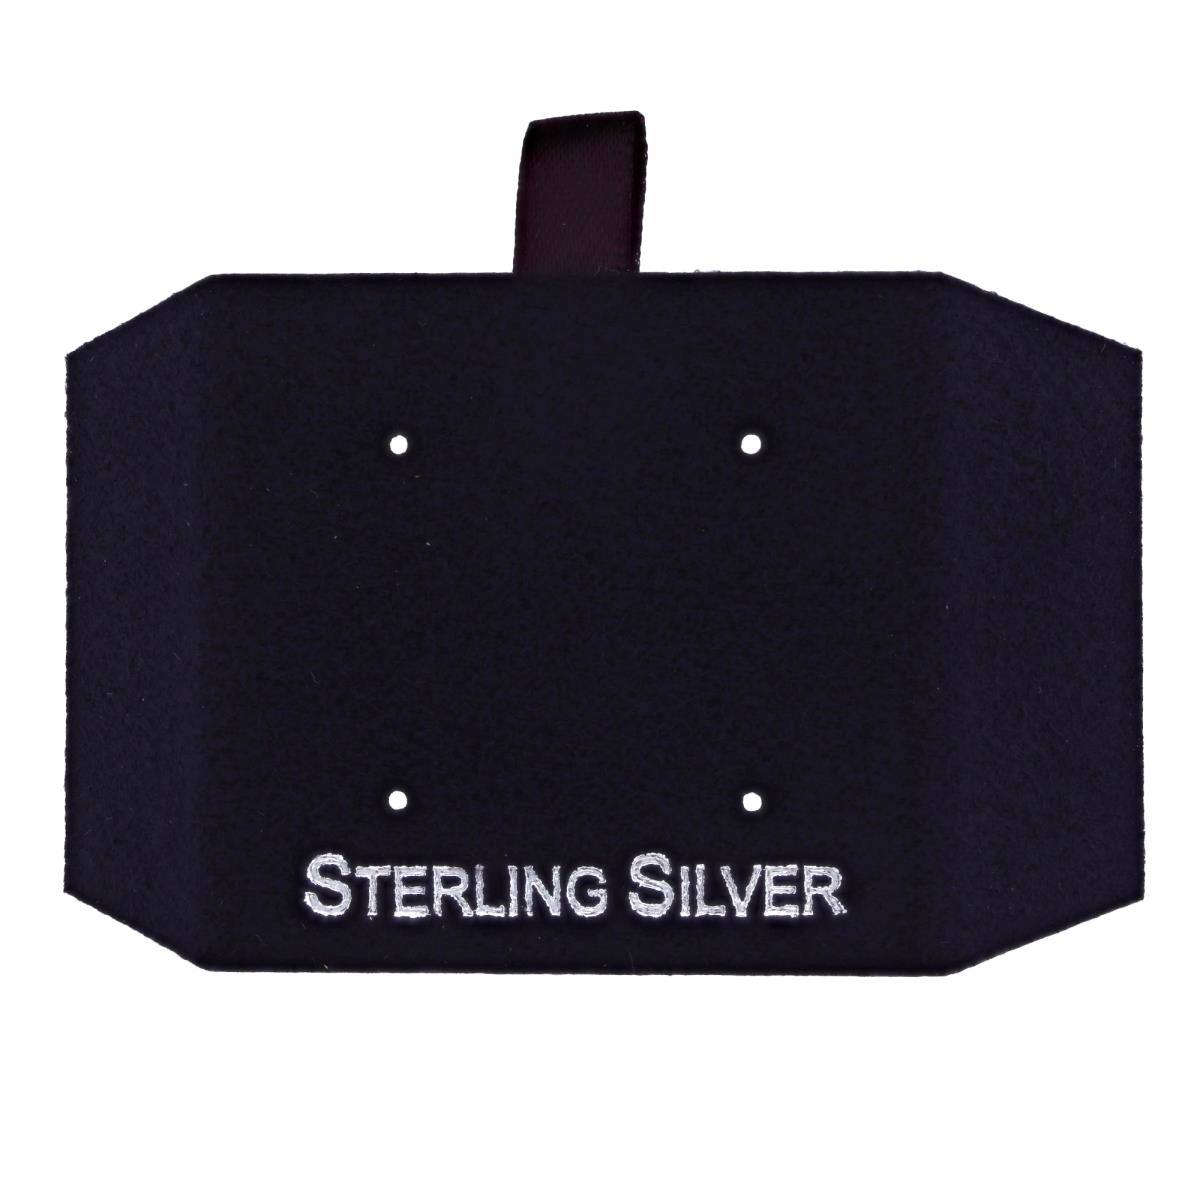 Navy Sterling Silver, Silver Foil 2 Stud Insert (Box B06-159/Navy/D)